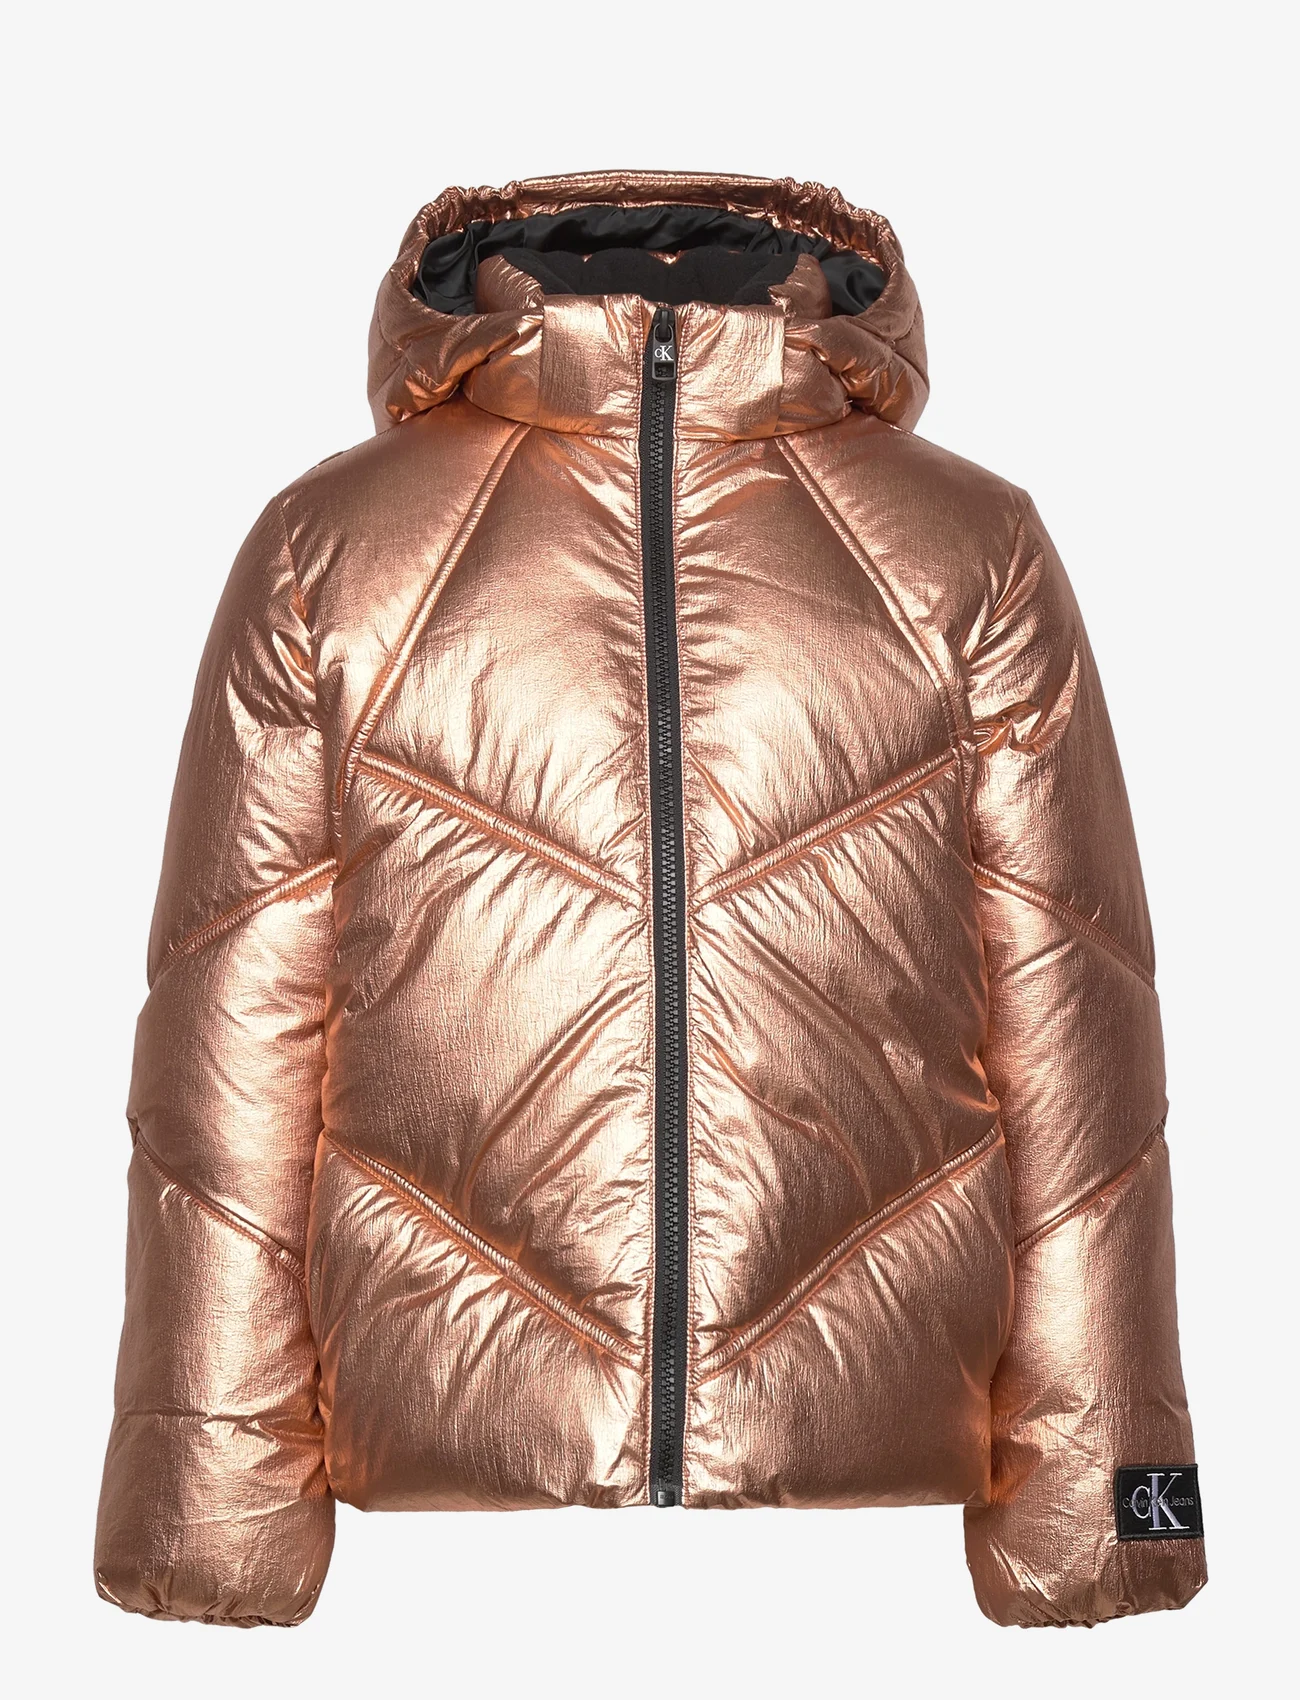 Calvin Klein - BRONZE METALLIC PUFFER JACKET - wyściełana kurtka - bronze metallic - 0